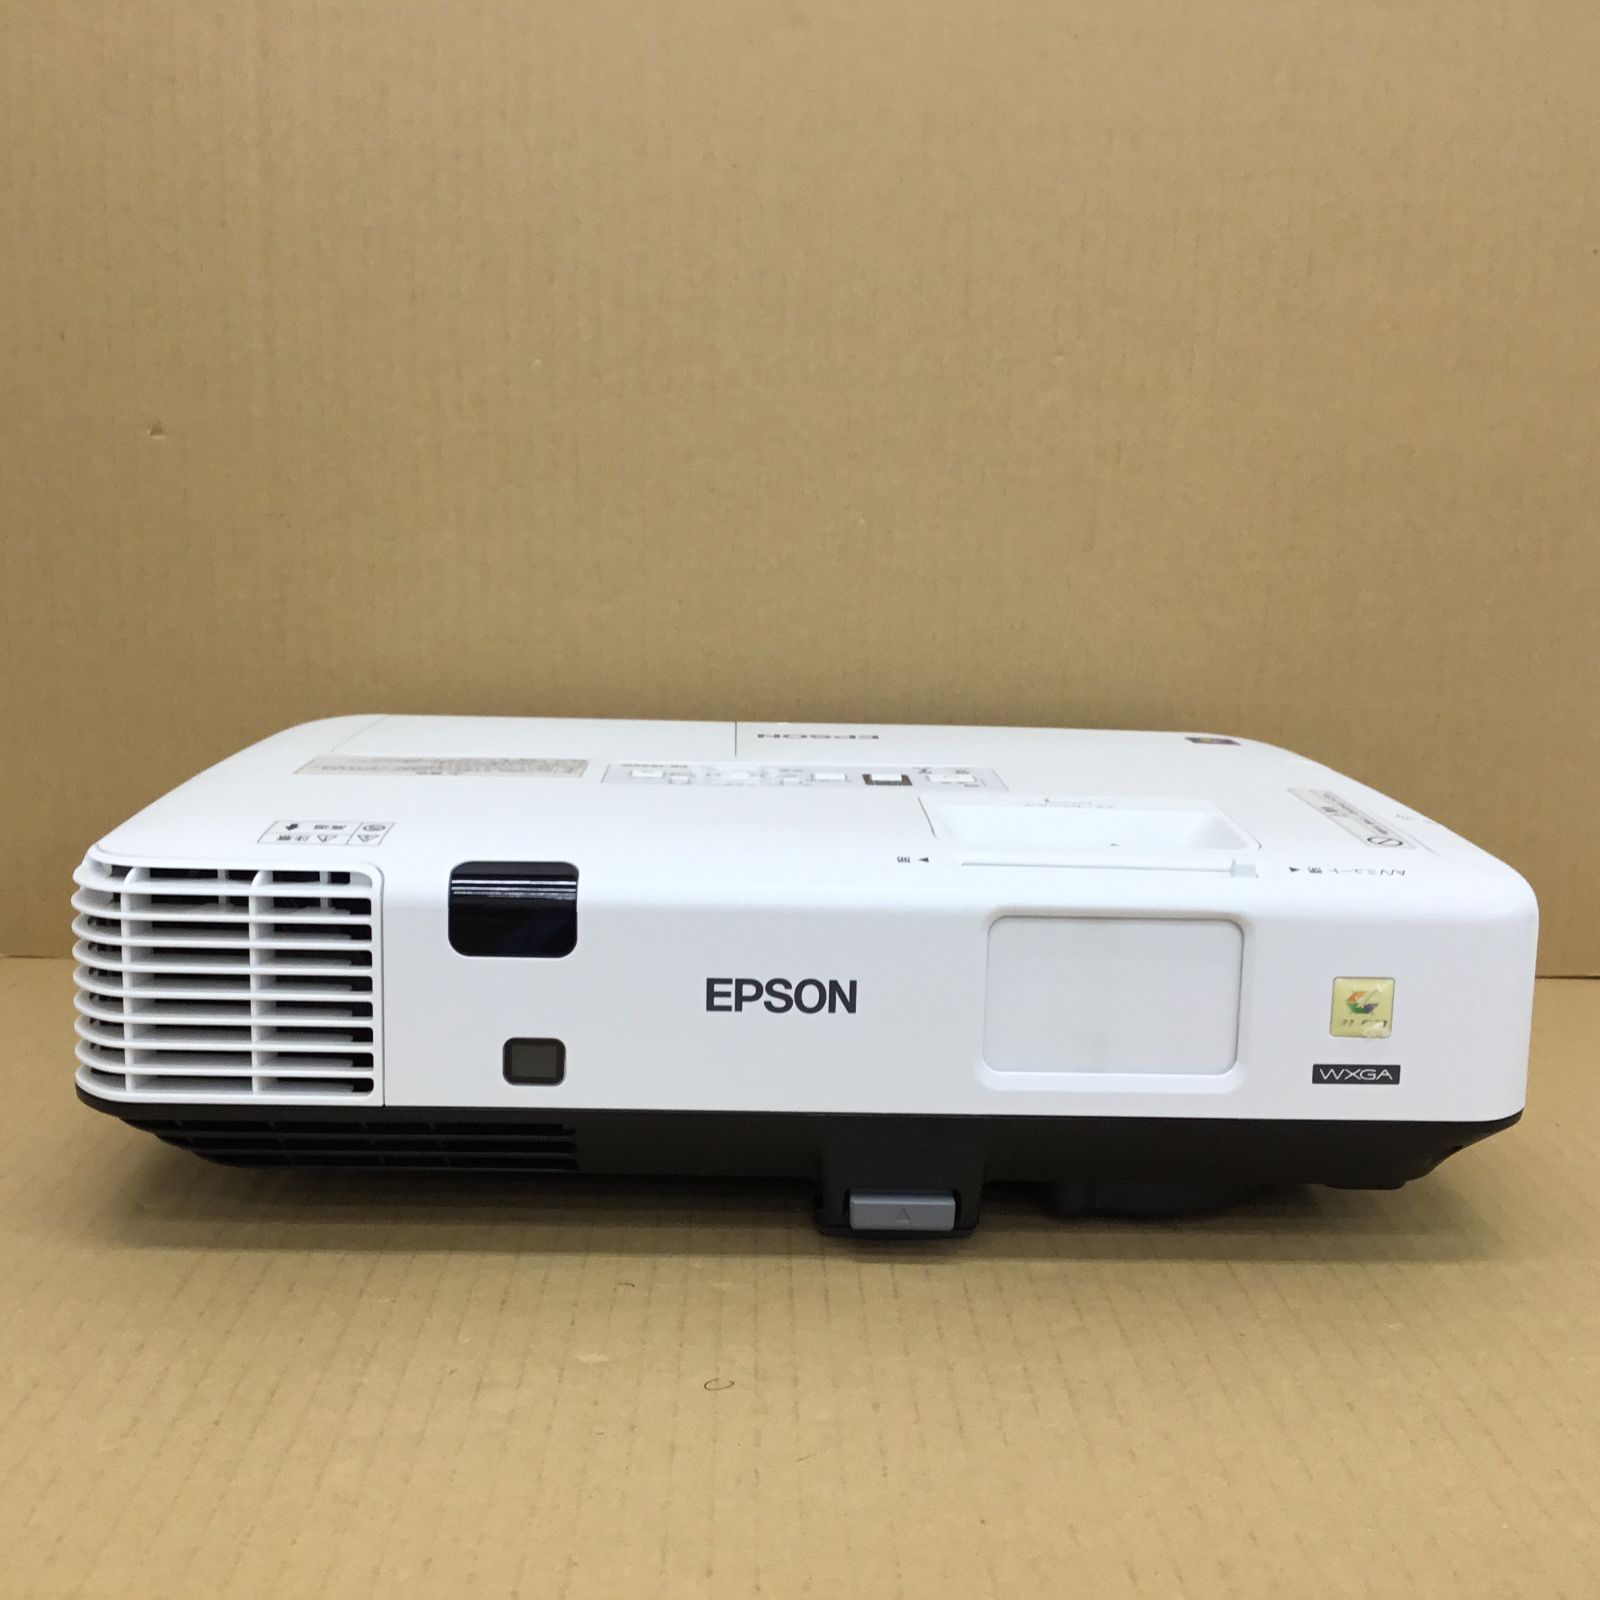 EPSON プロジェクター EB-1945W 4,200lm エプソン